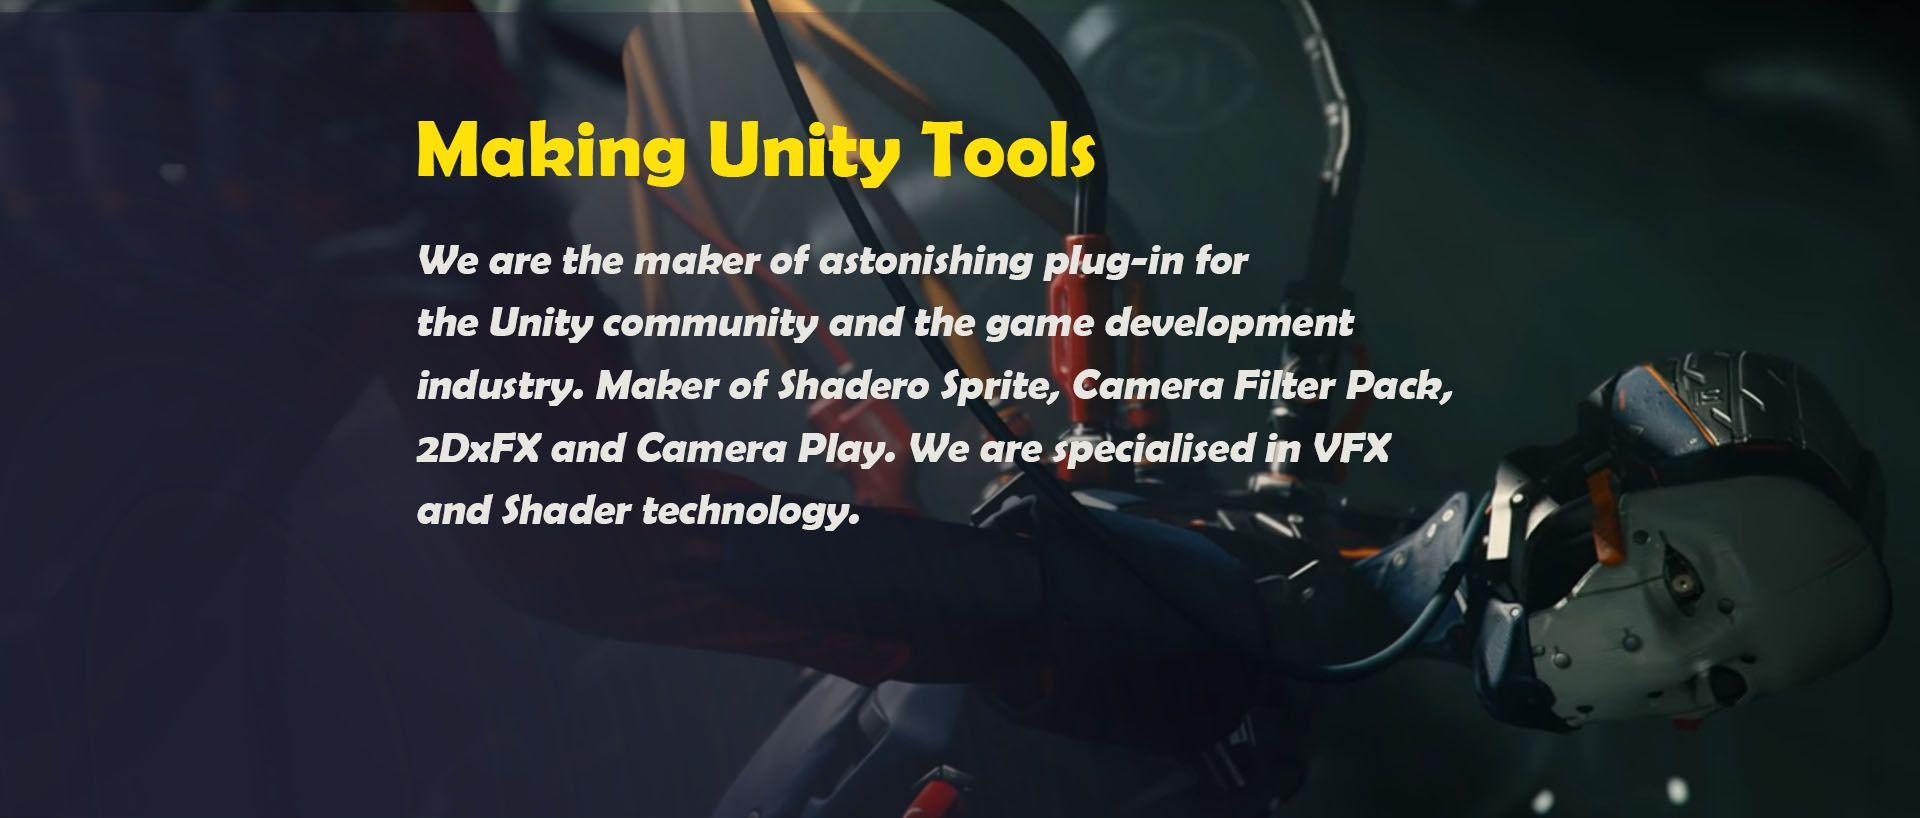 Making Unity Tools